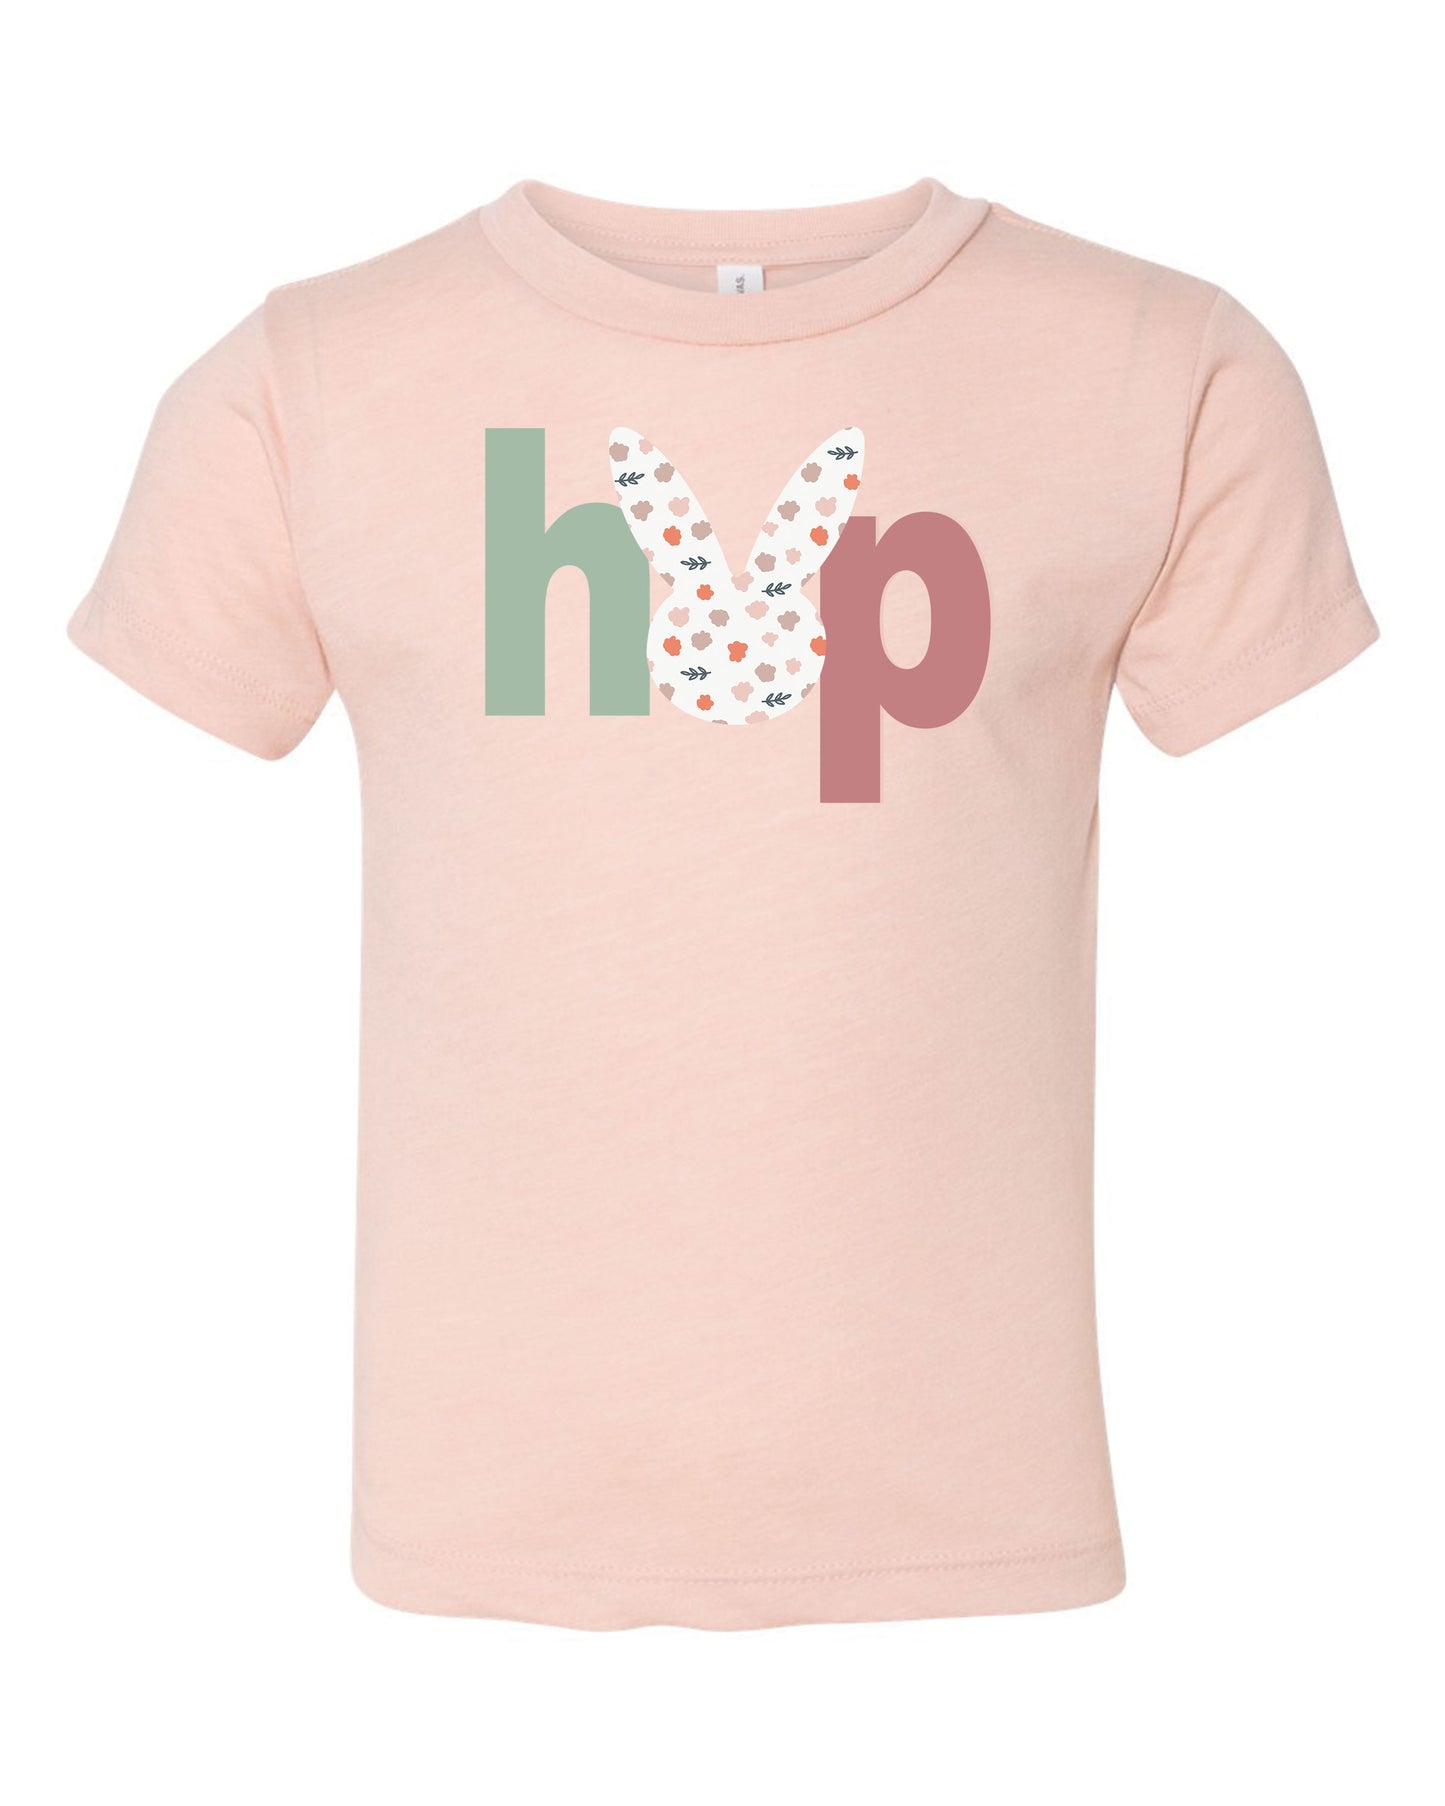 Hop | Kids Tee-Kids Tees-Sister Shirts-Sister Shirts, Cute & Custom Tees for Mama & Littles in Trussville, Alabama.